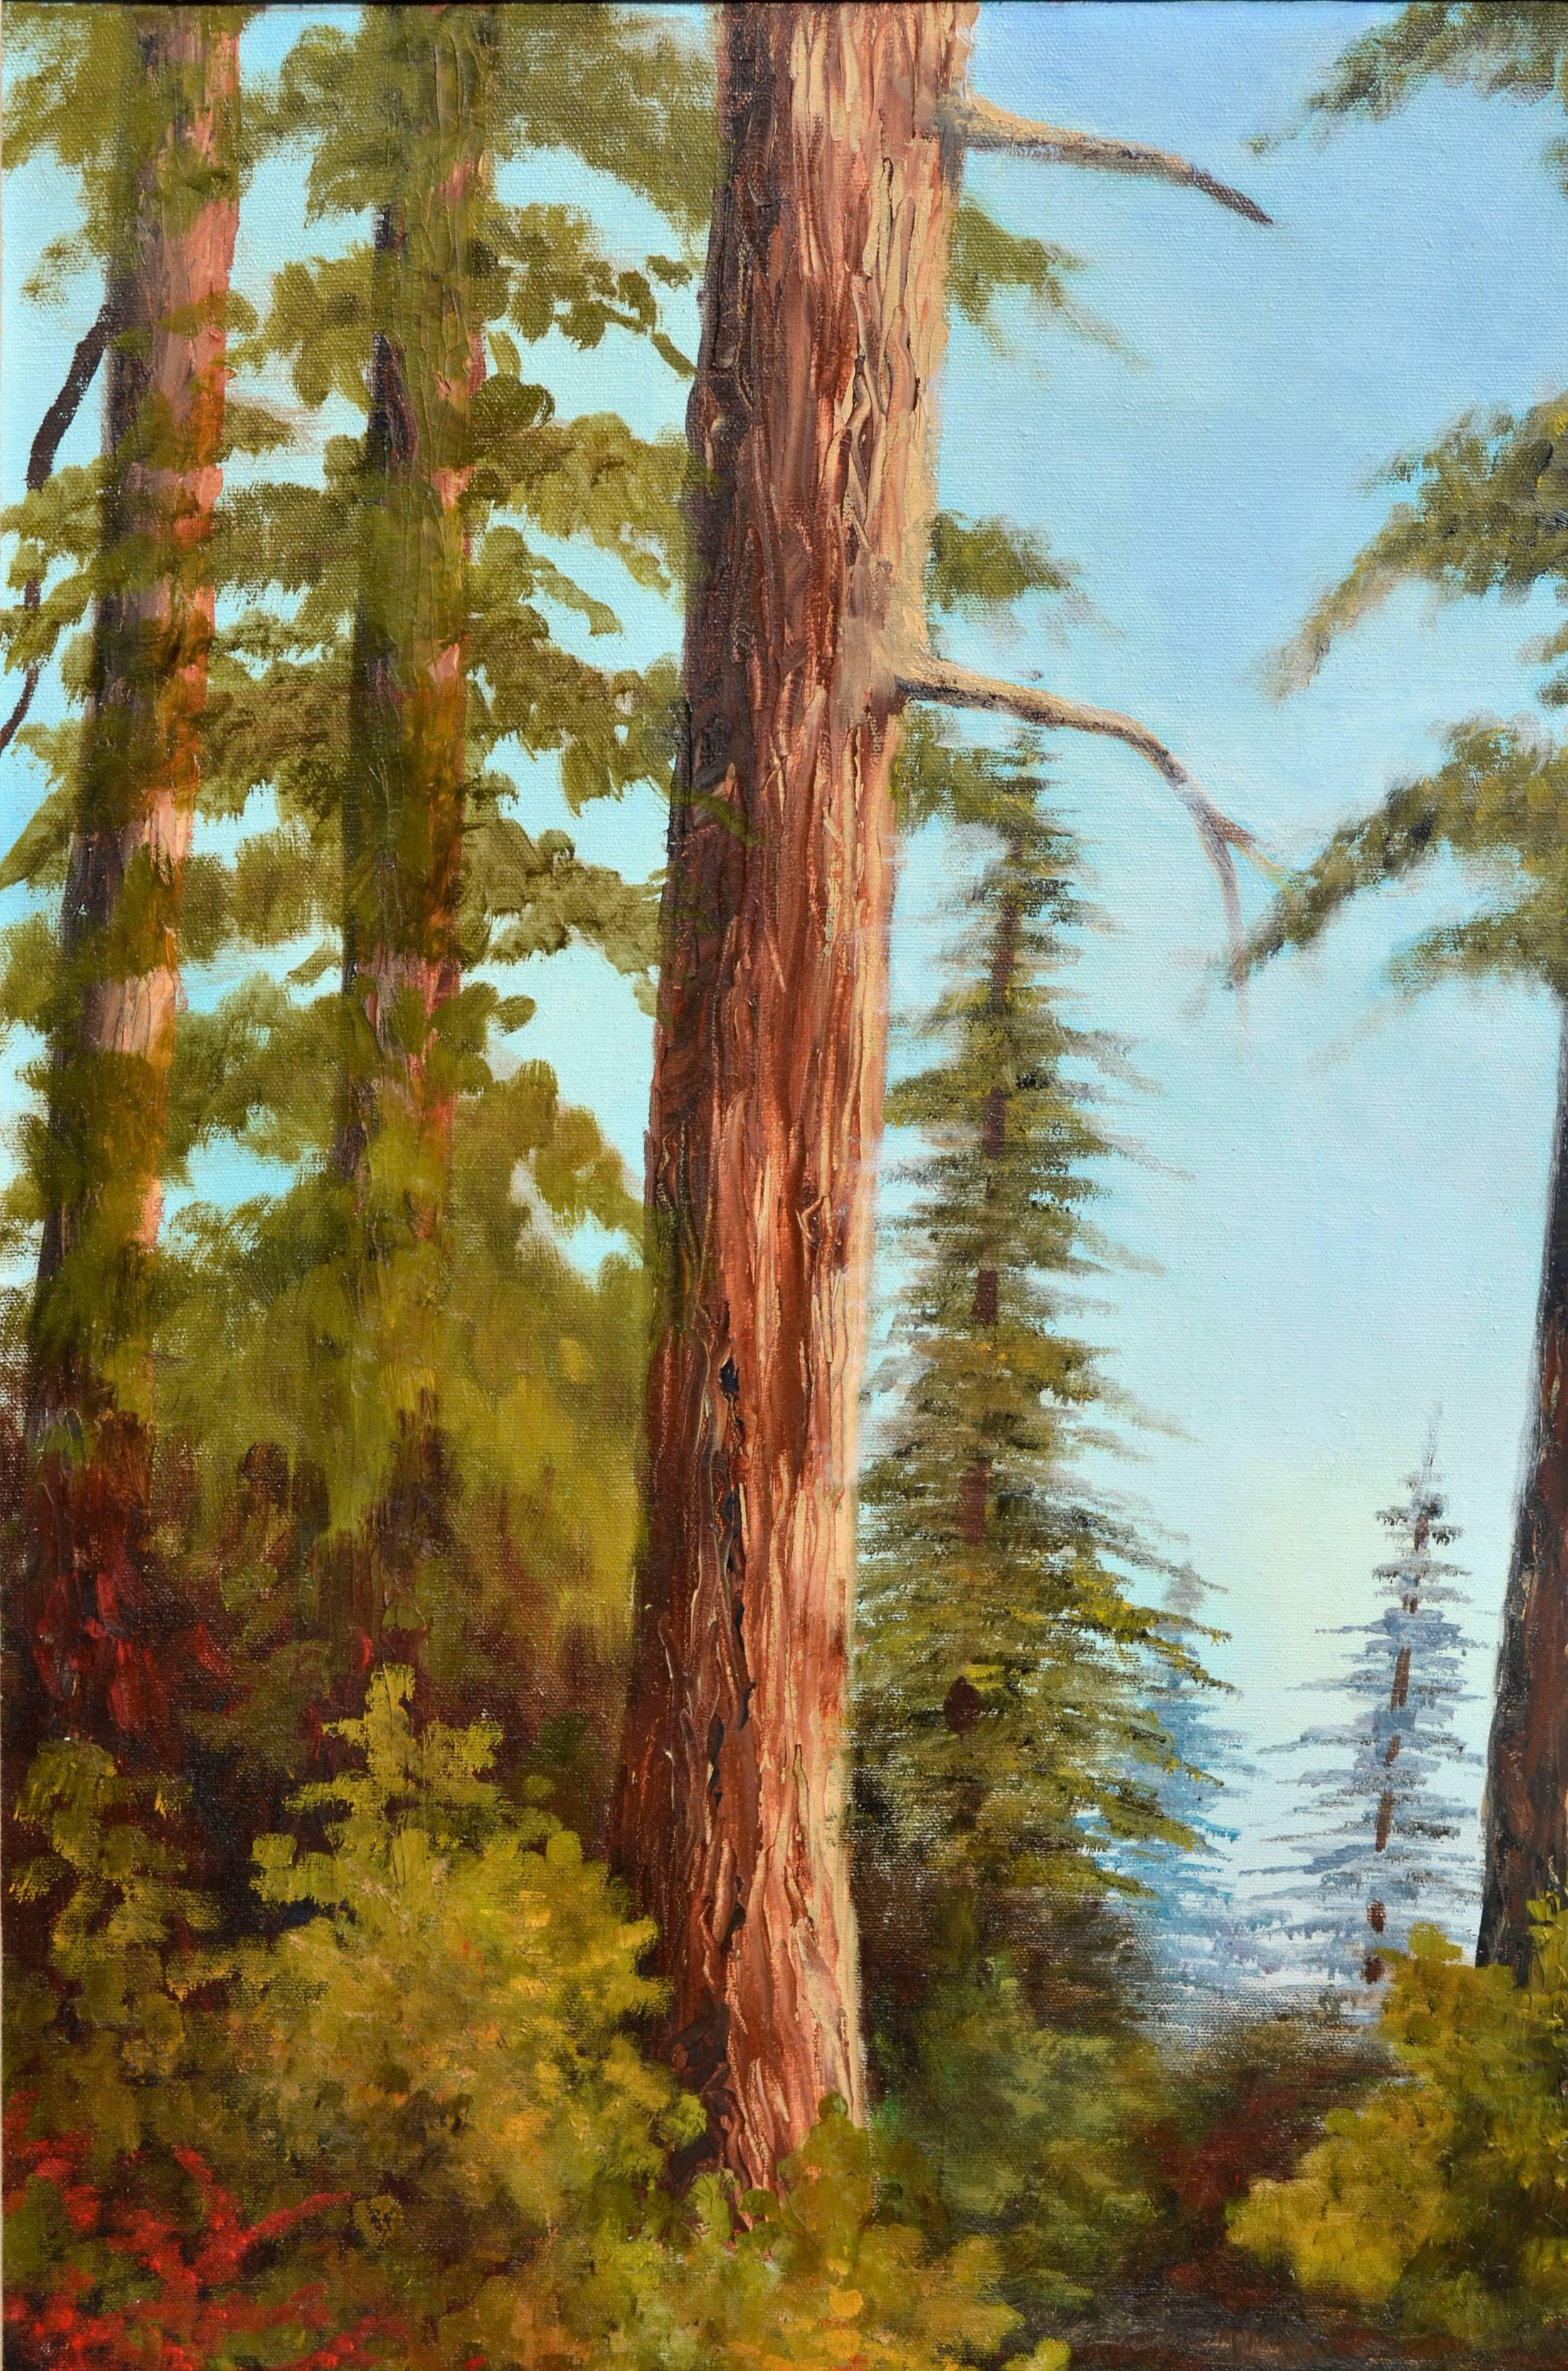 California Redwoods Trail - Burns 2